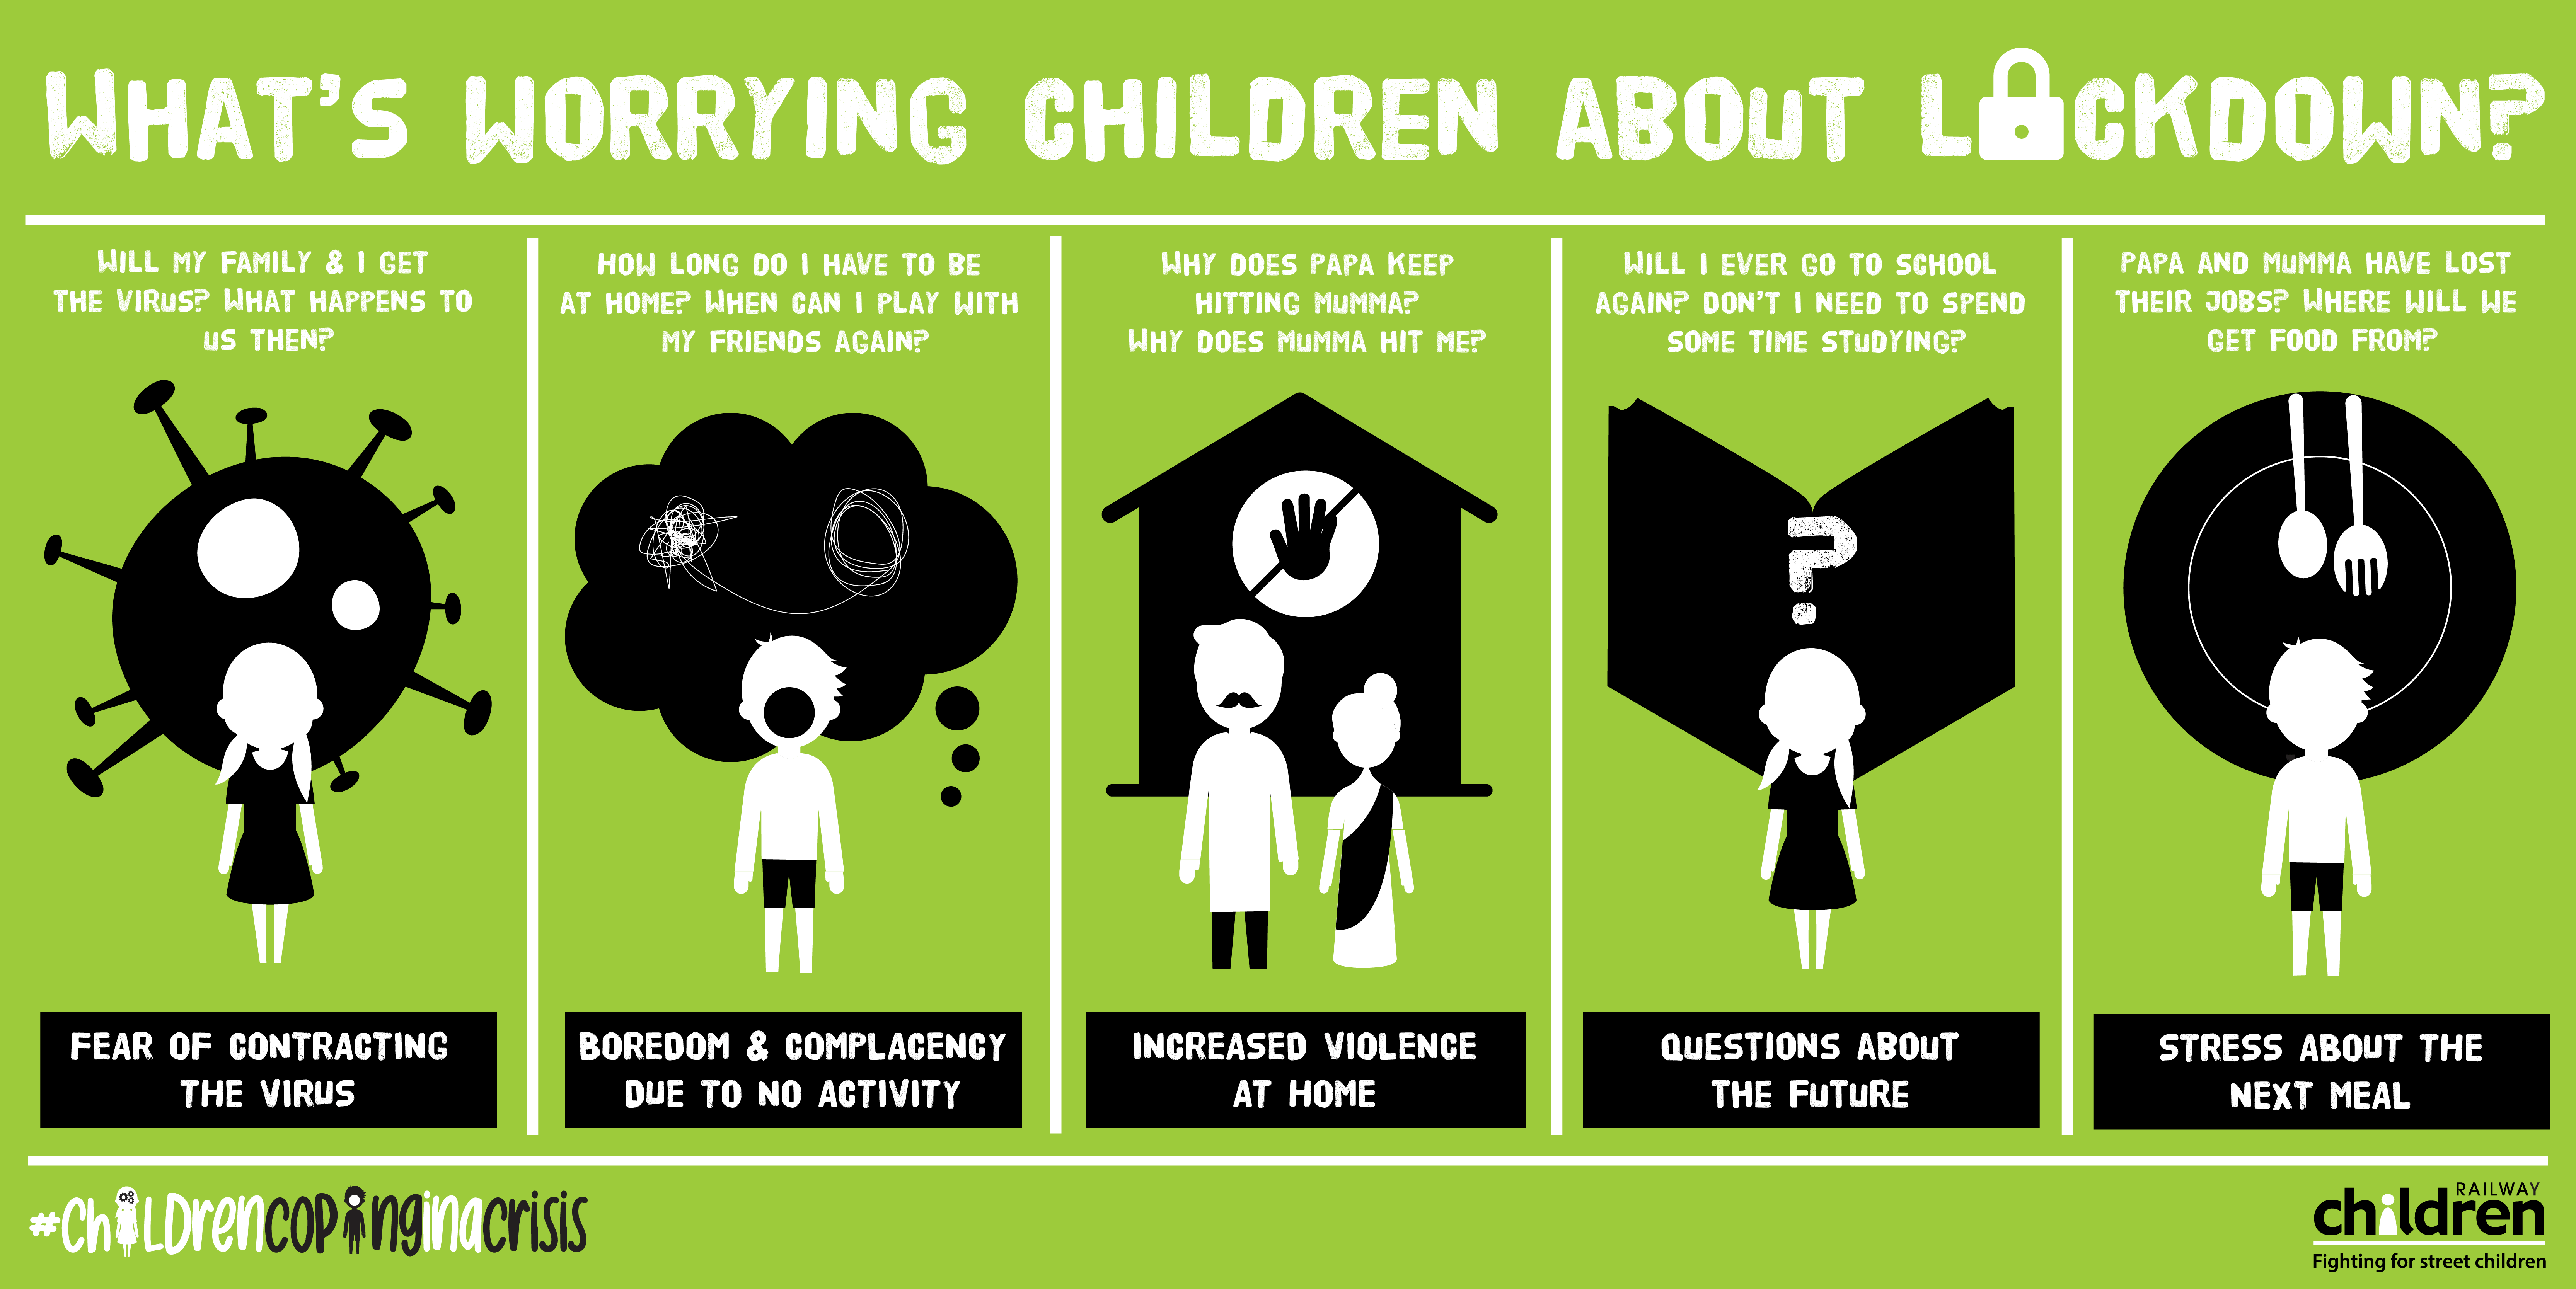 #ChildrenCopingInACrisis - What's Worrying Children About Lockdown?